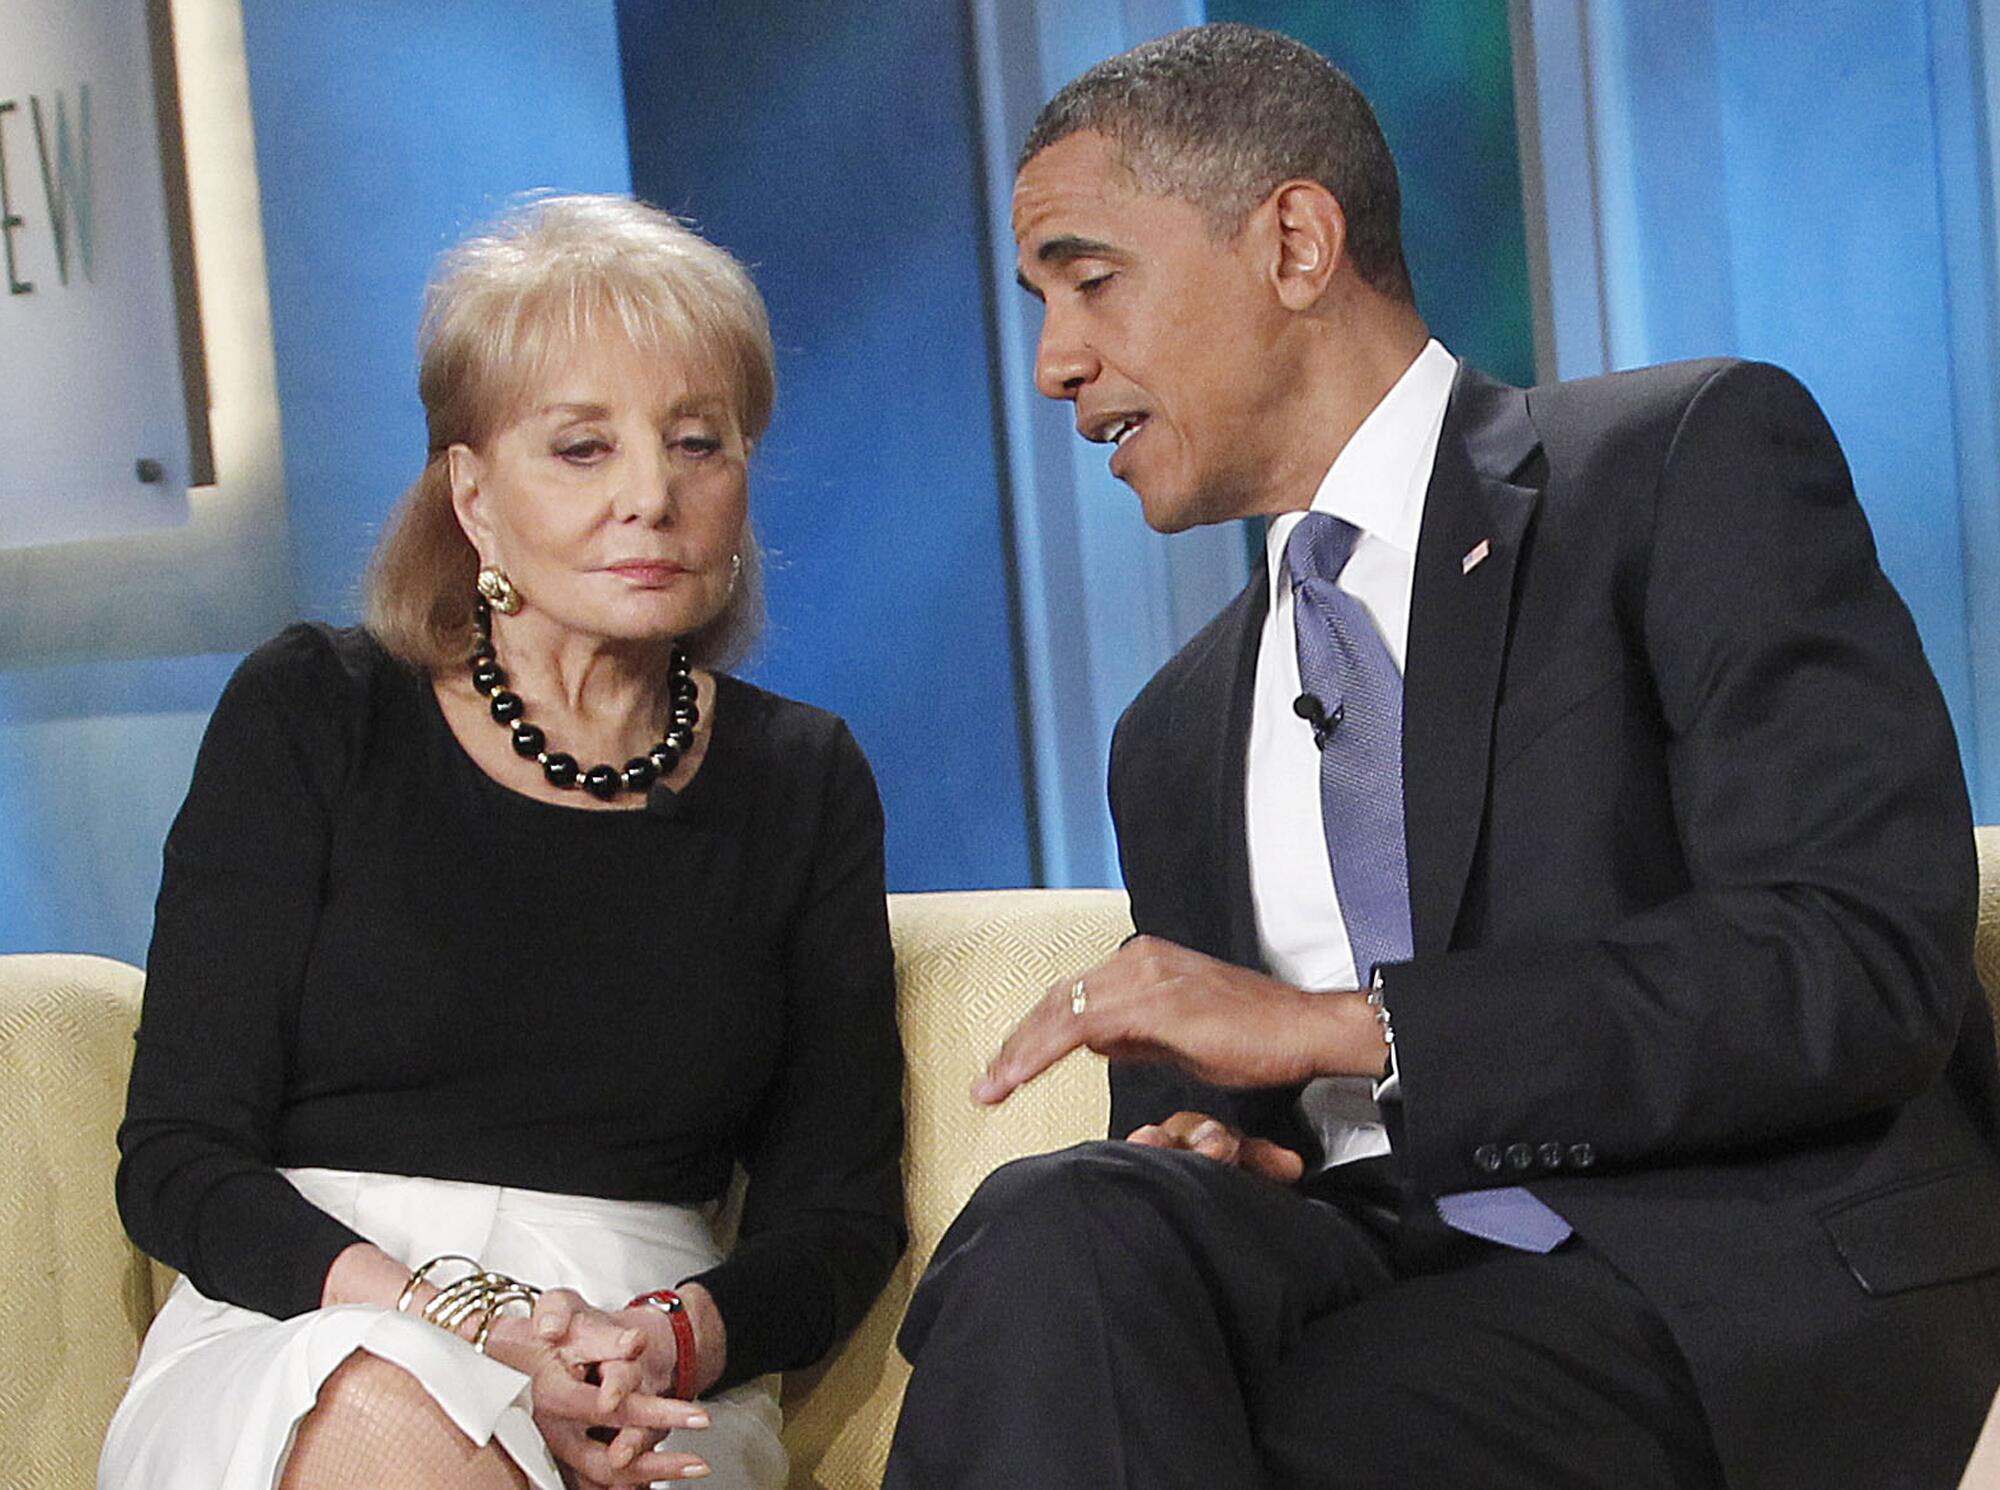 President Obama speaks to Barbara Walters 